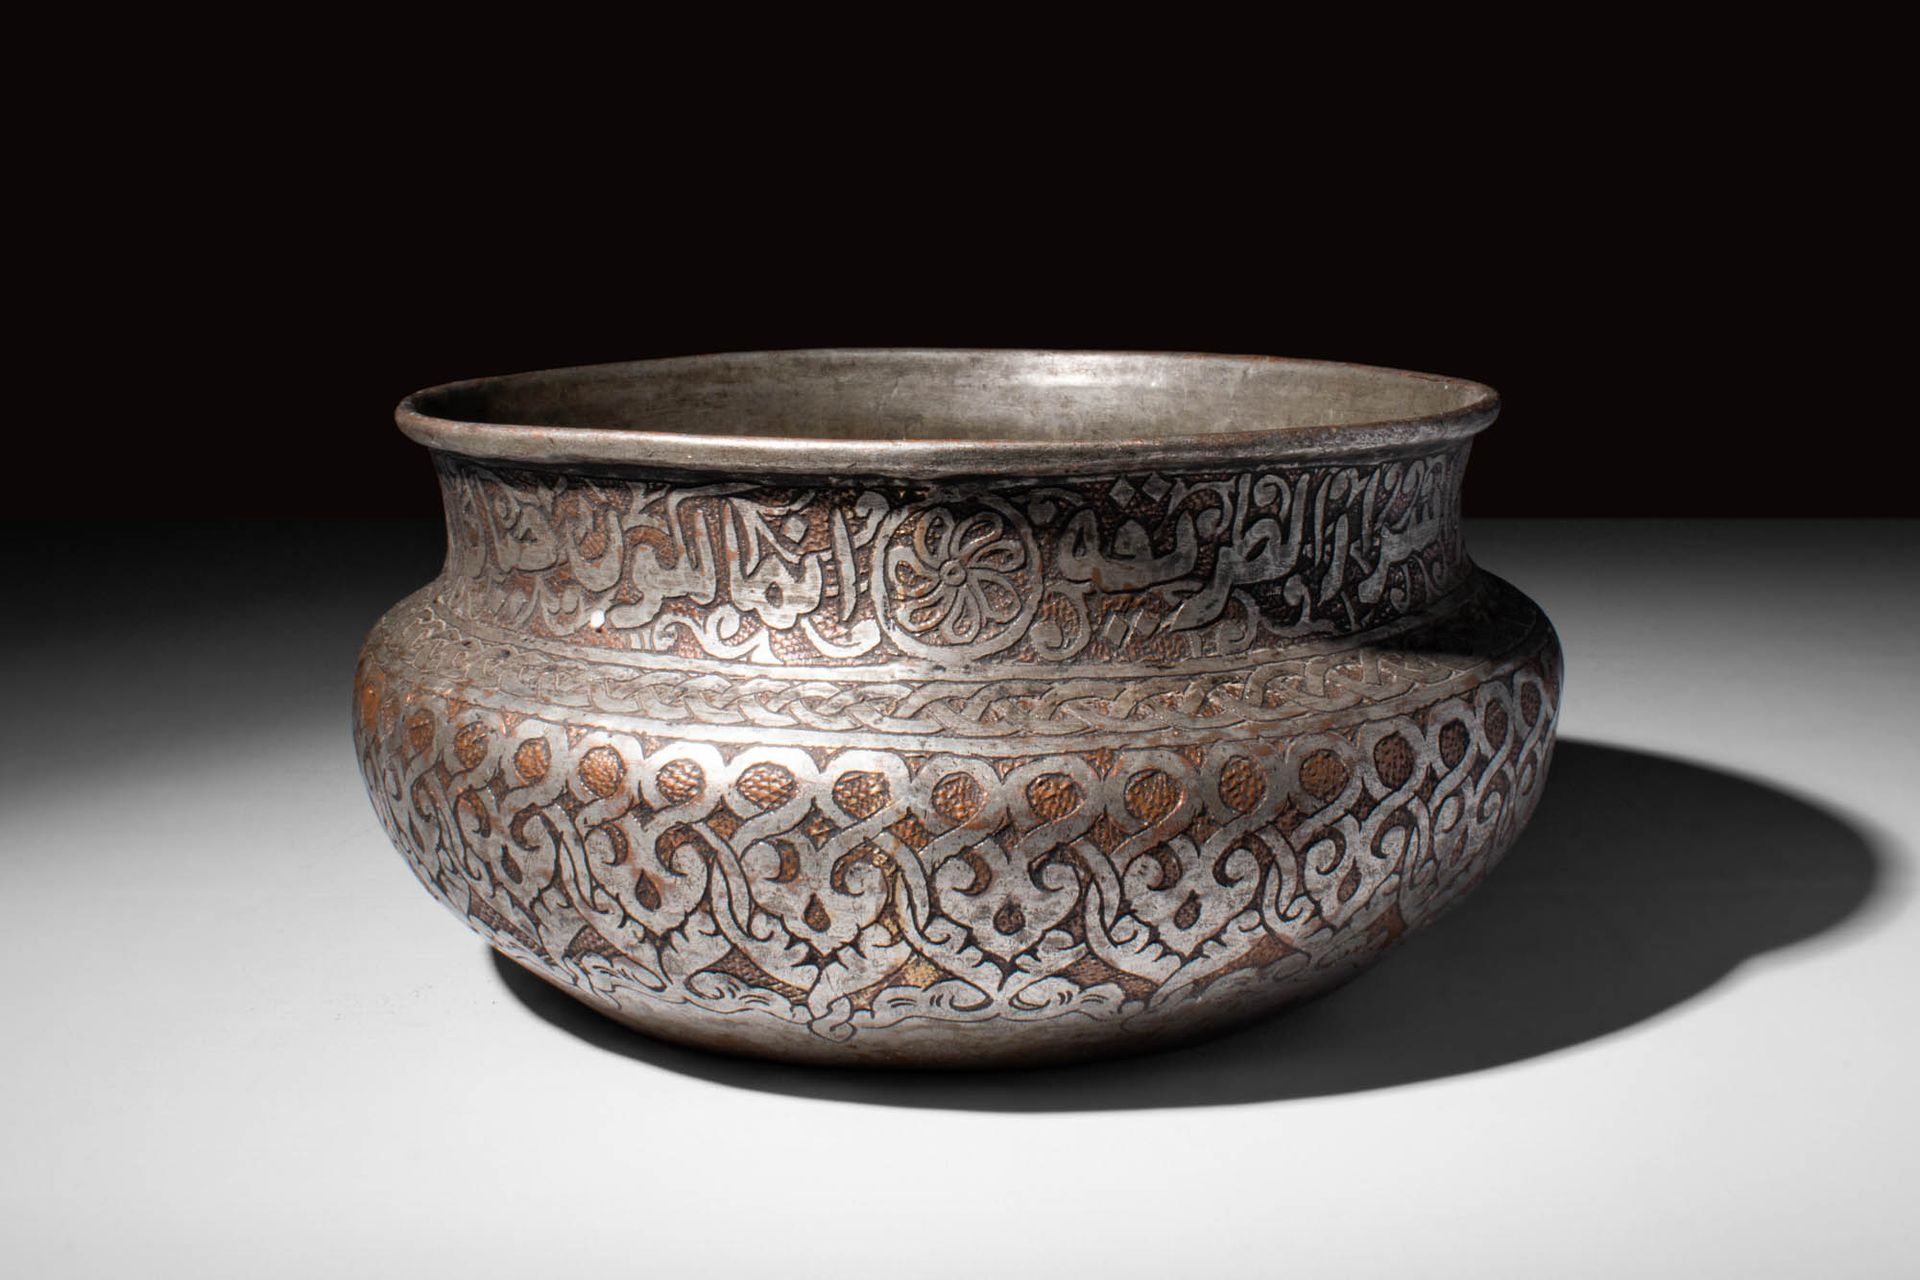 MEDIEVAL SELJUK COPPER ALLOY INLAID VESSEL Ca.约 1100 - 1200 年。
一件令人惊叹的塞尔柱铜合金镶嵌器皿&hellip;